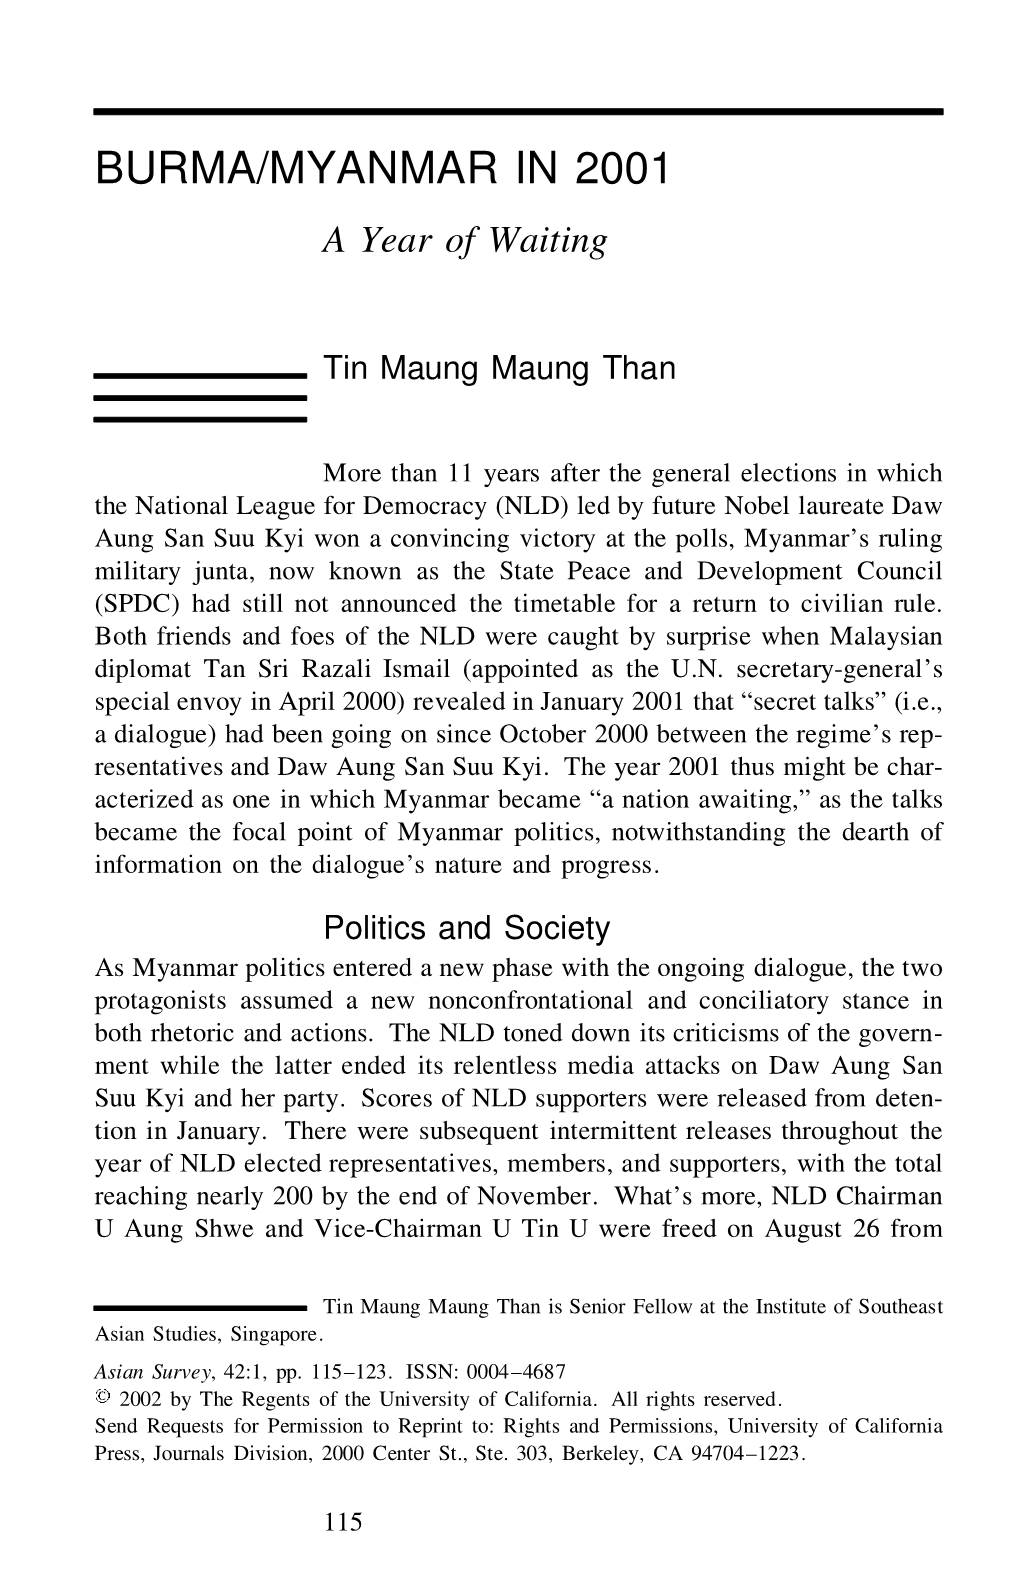 Burma/Myanmar in 2001: a Year of Waiting